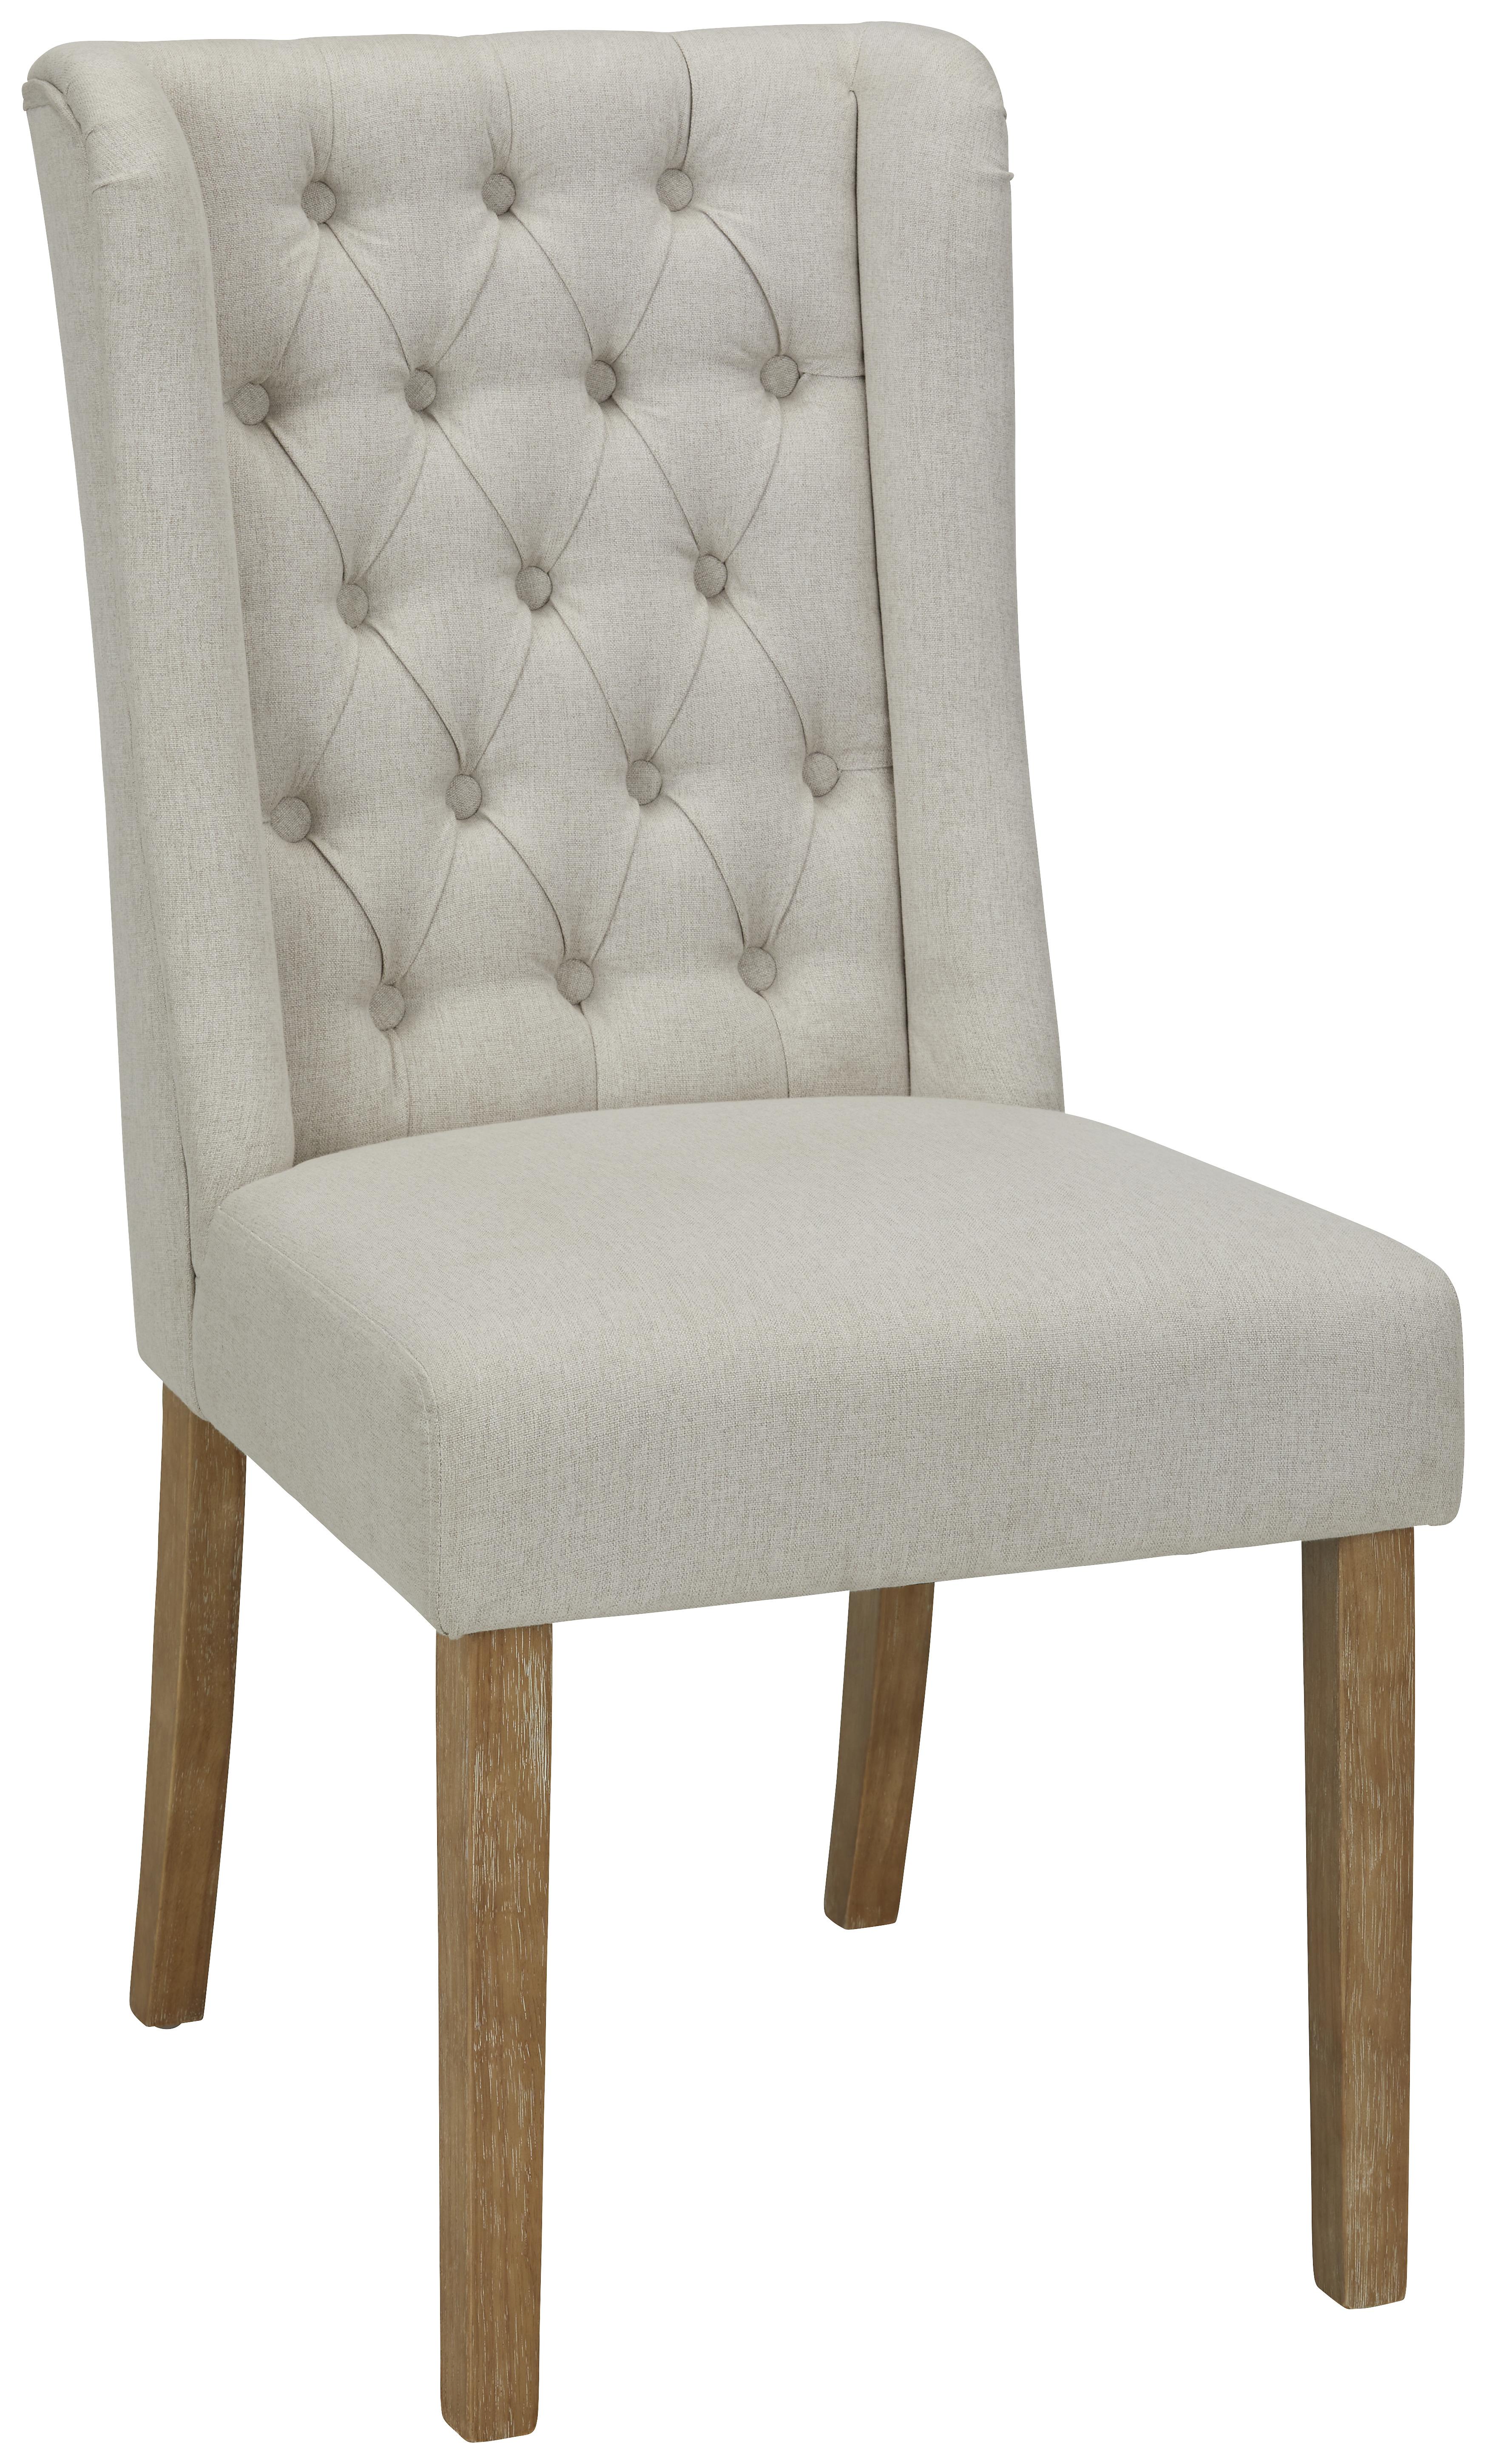 Stuhl in Beige - Beige/Naturfarben, ROMANTIK / LANDHAUS, Holz/Textil (52/101/66cm) - Zandiara